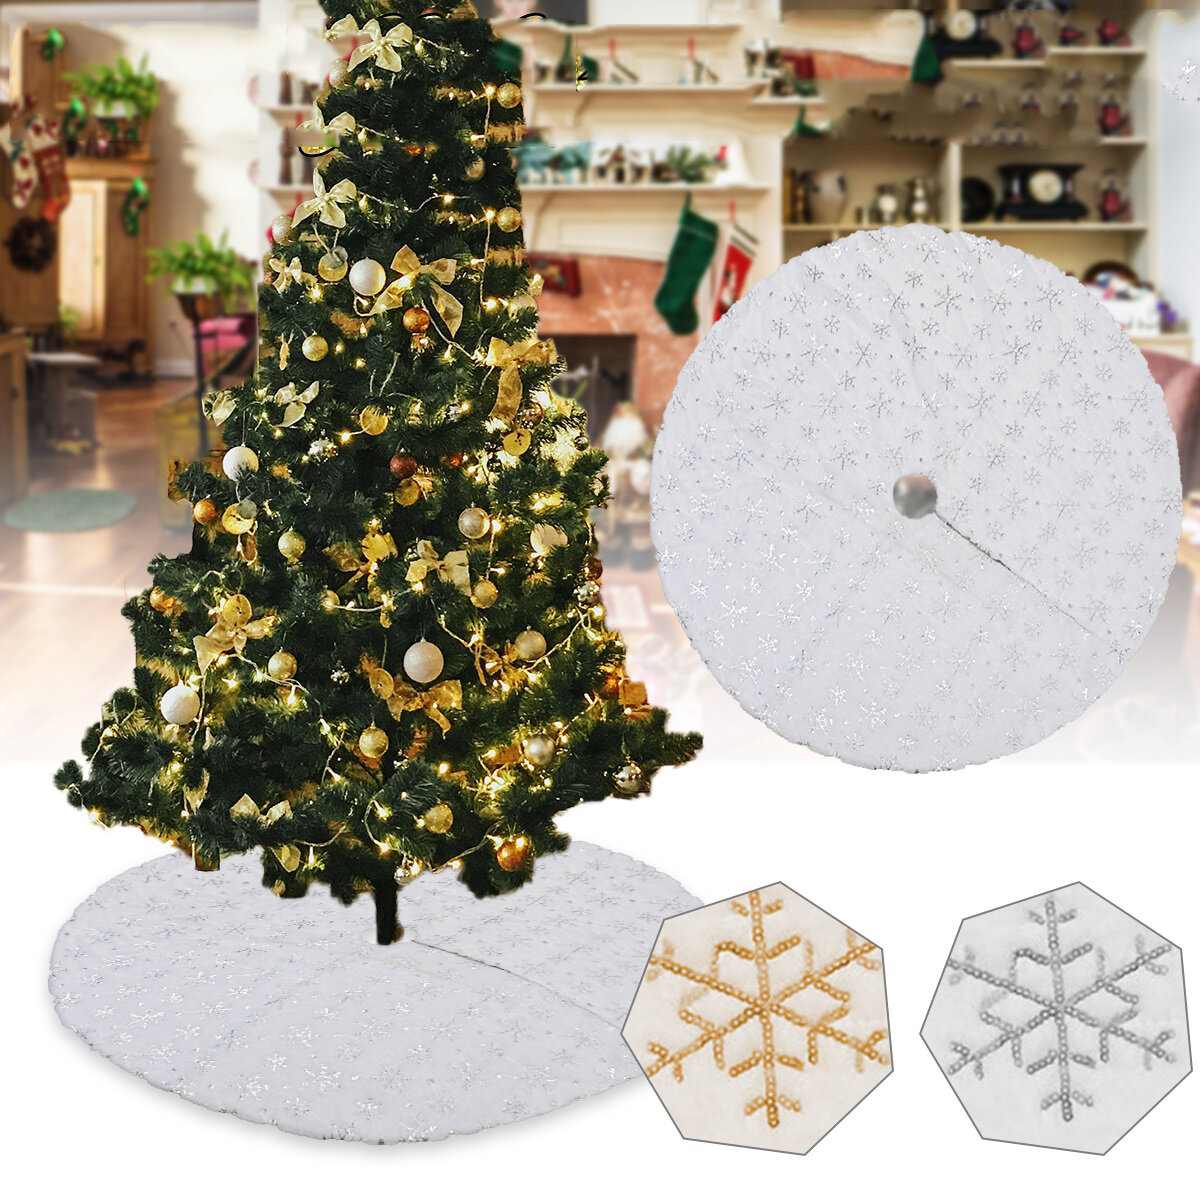 90/120cm Christmas Tree Skirt Tree Skirt Mat Under The Tree Christmas Decorations for Home Snowflake 2020 Christmas Tree